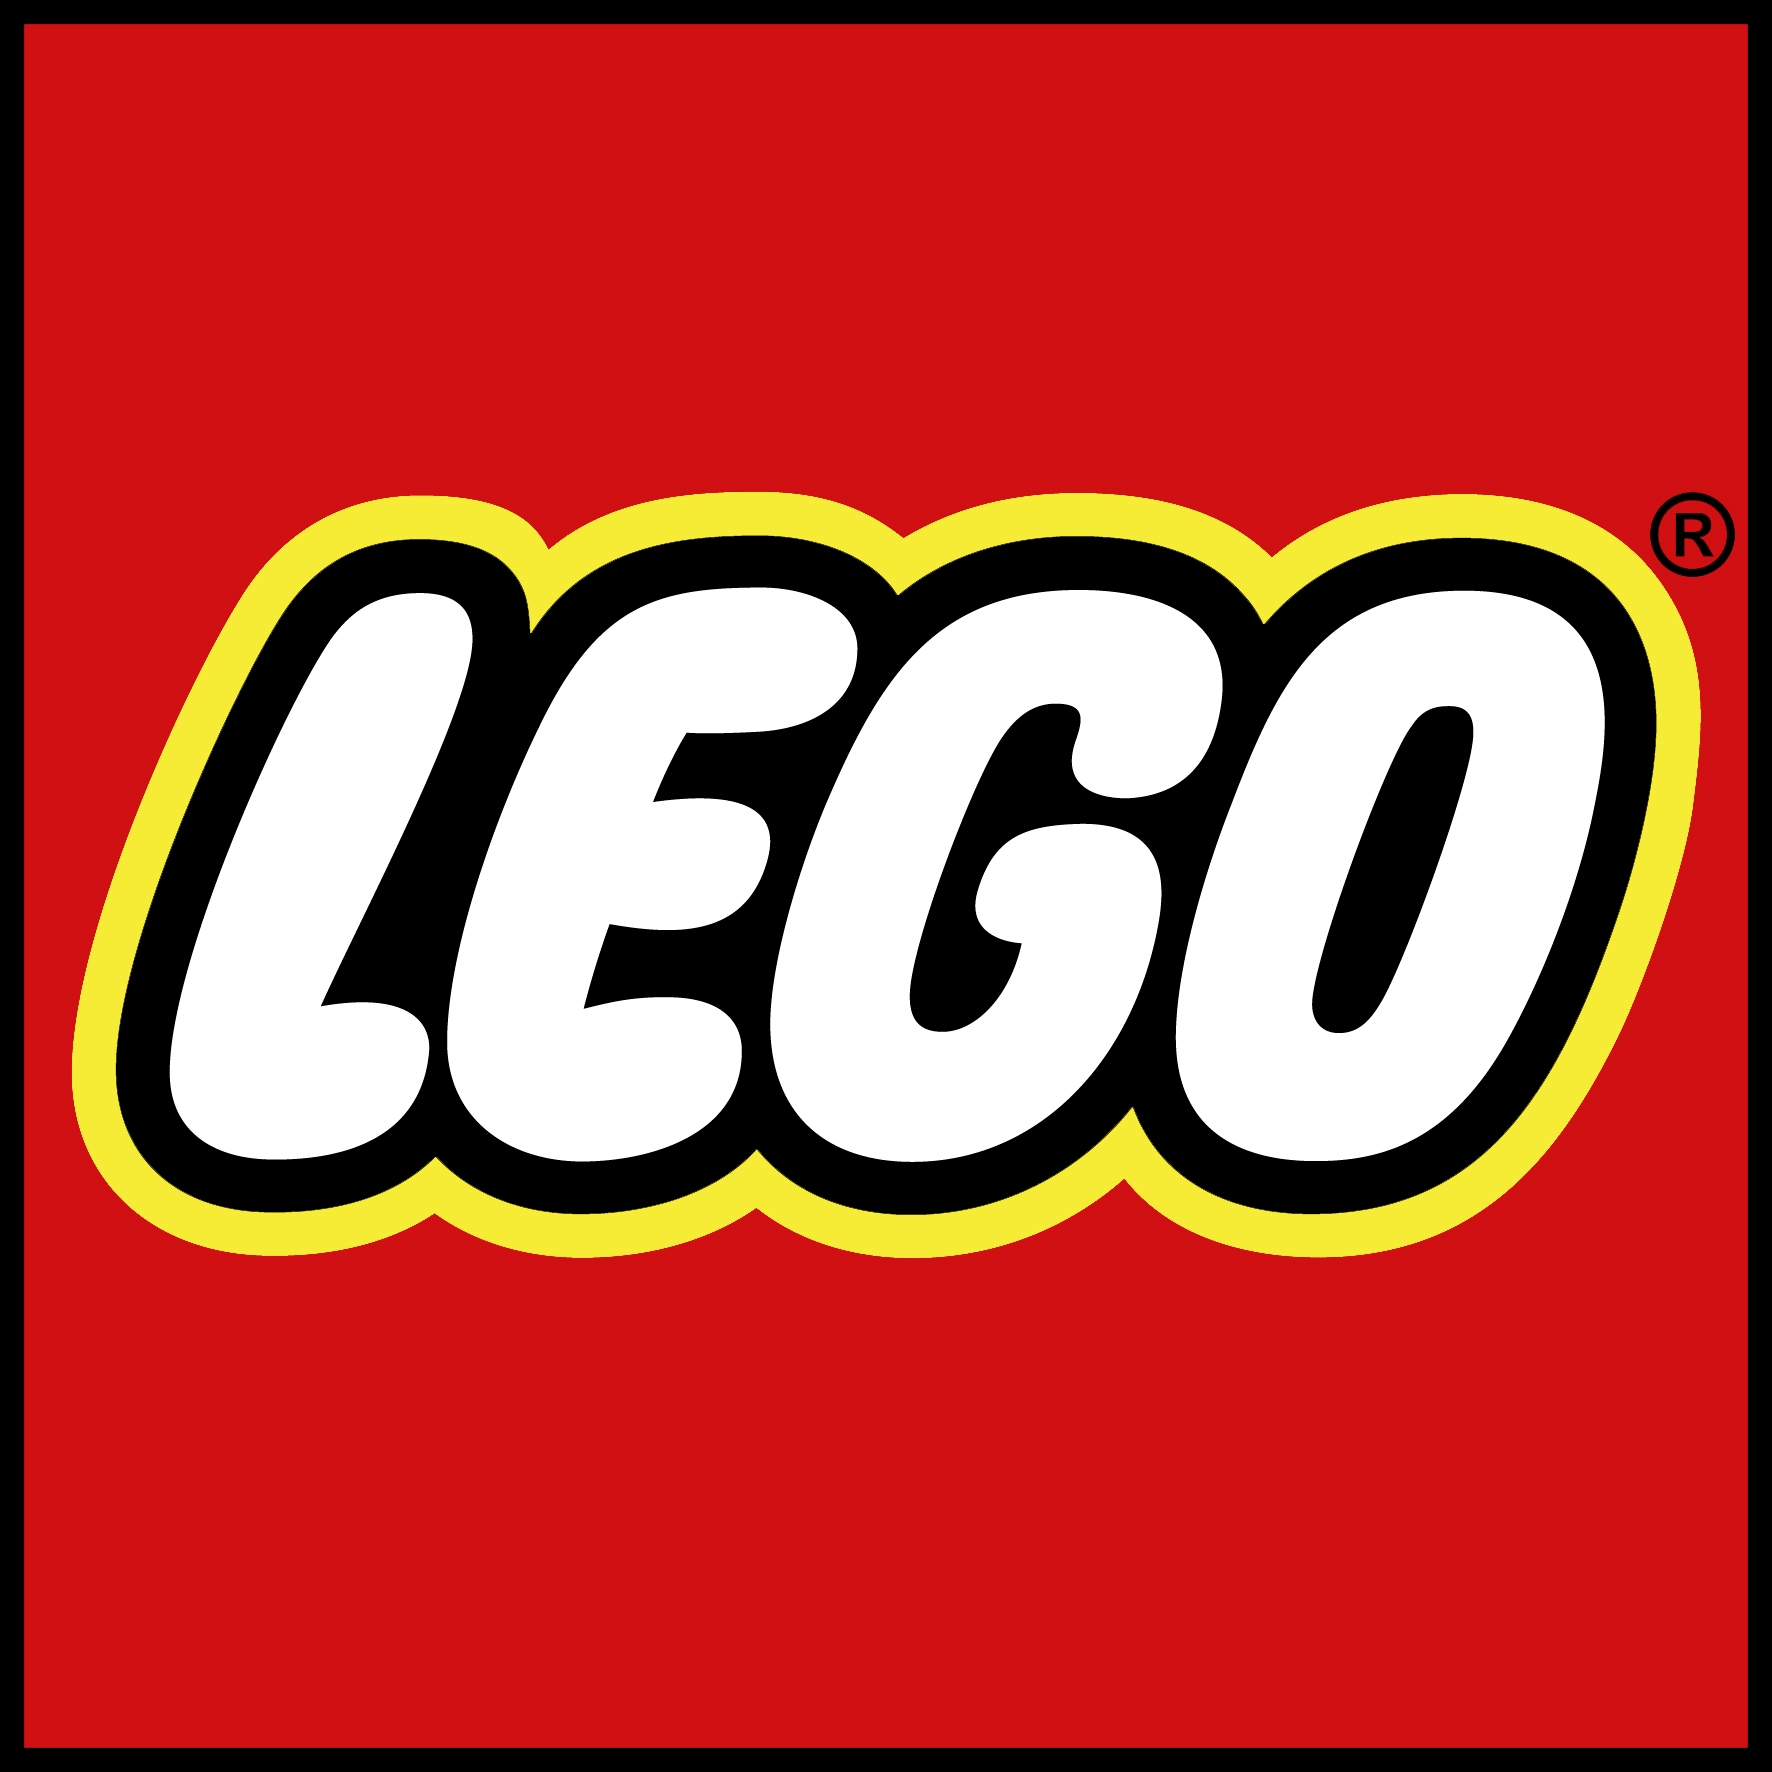 LEGO-logo2